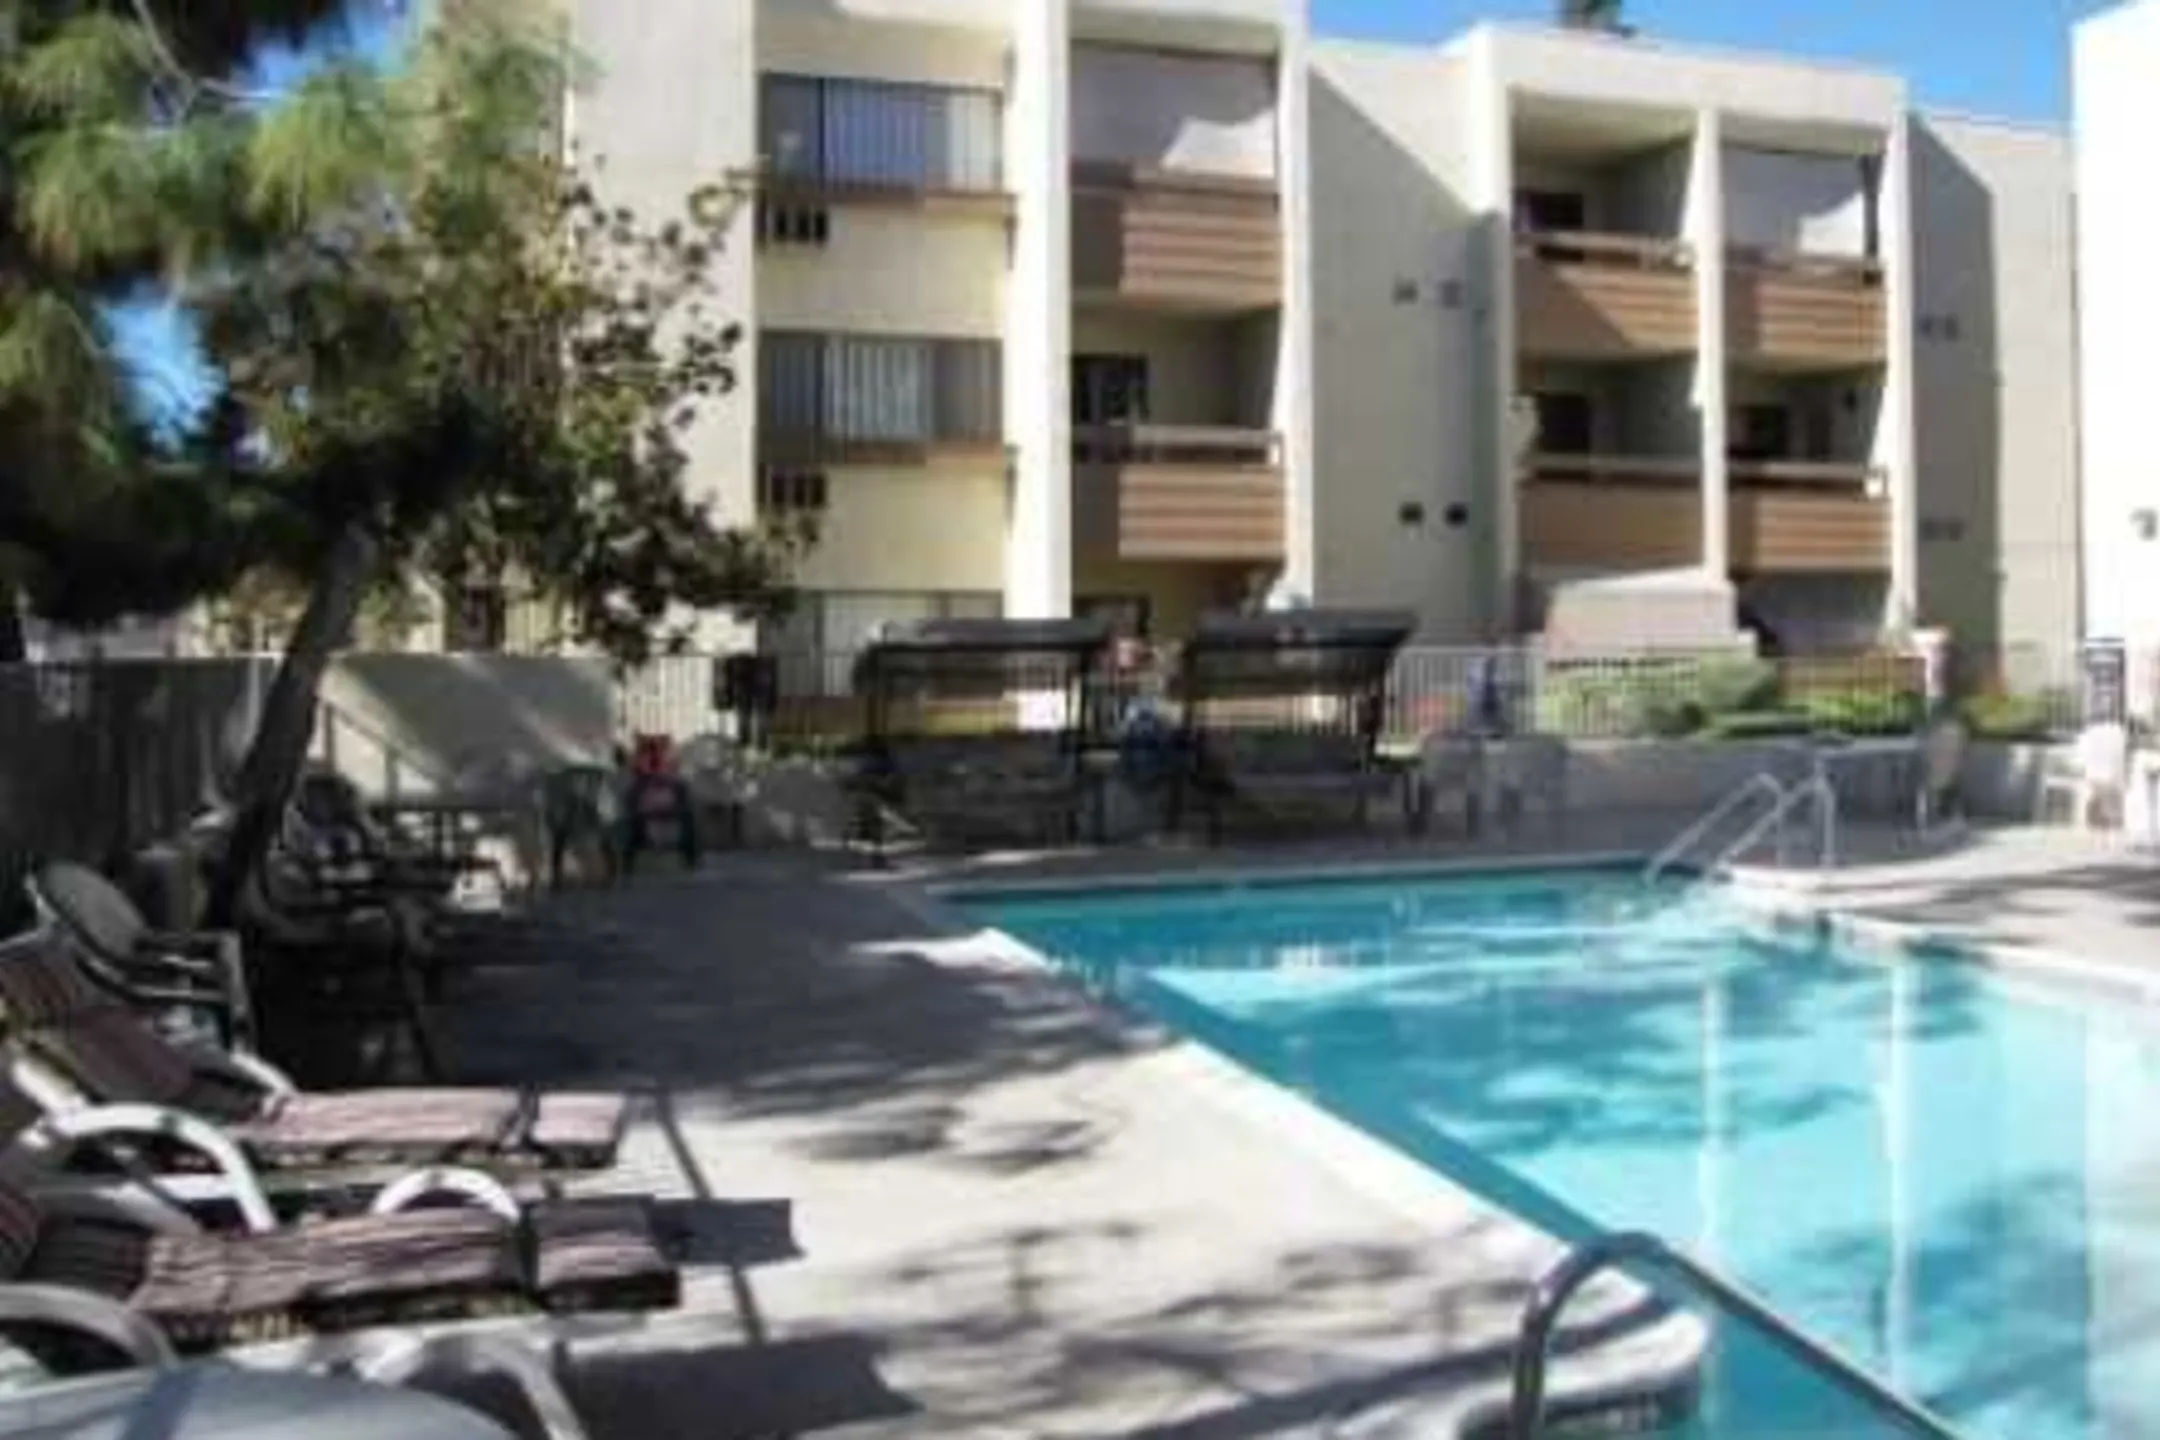 Pool - Guava Gardens - Senior Housing 62+ - La Mesa, CA